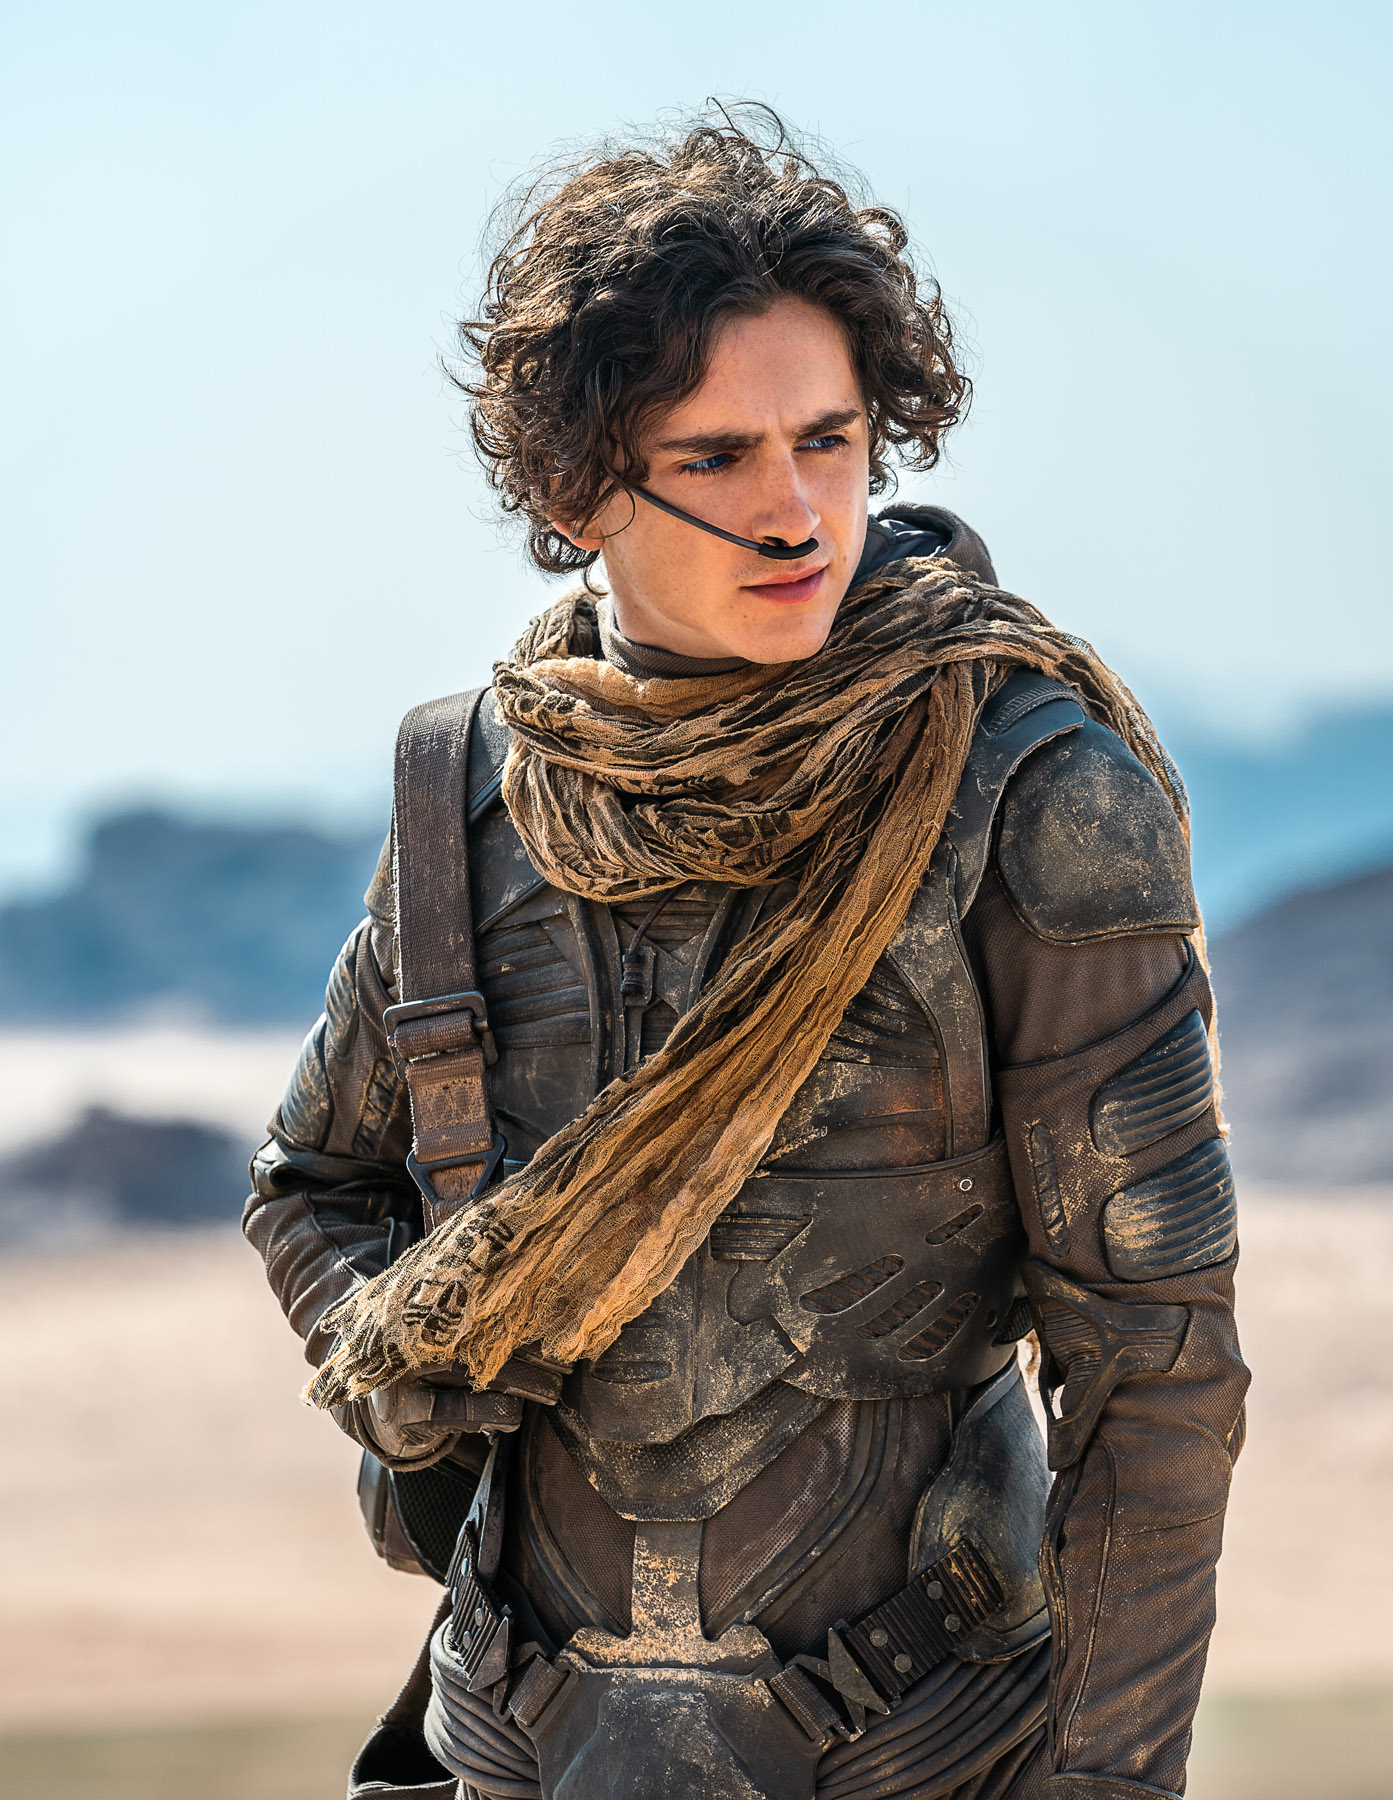 Timothée Chalamet in a futuristic desert warrior costume from the film Dune